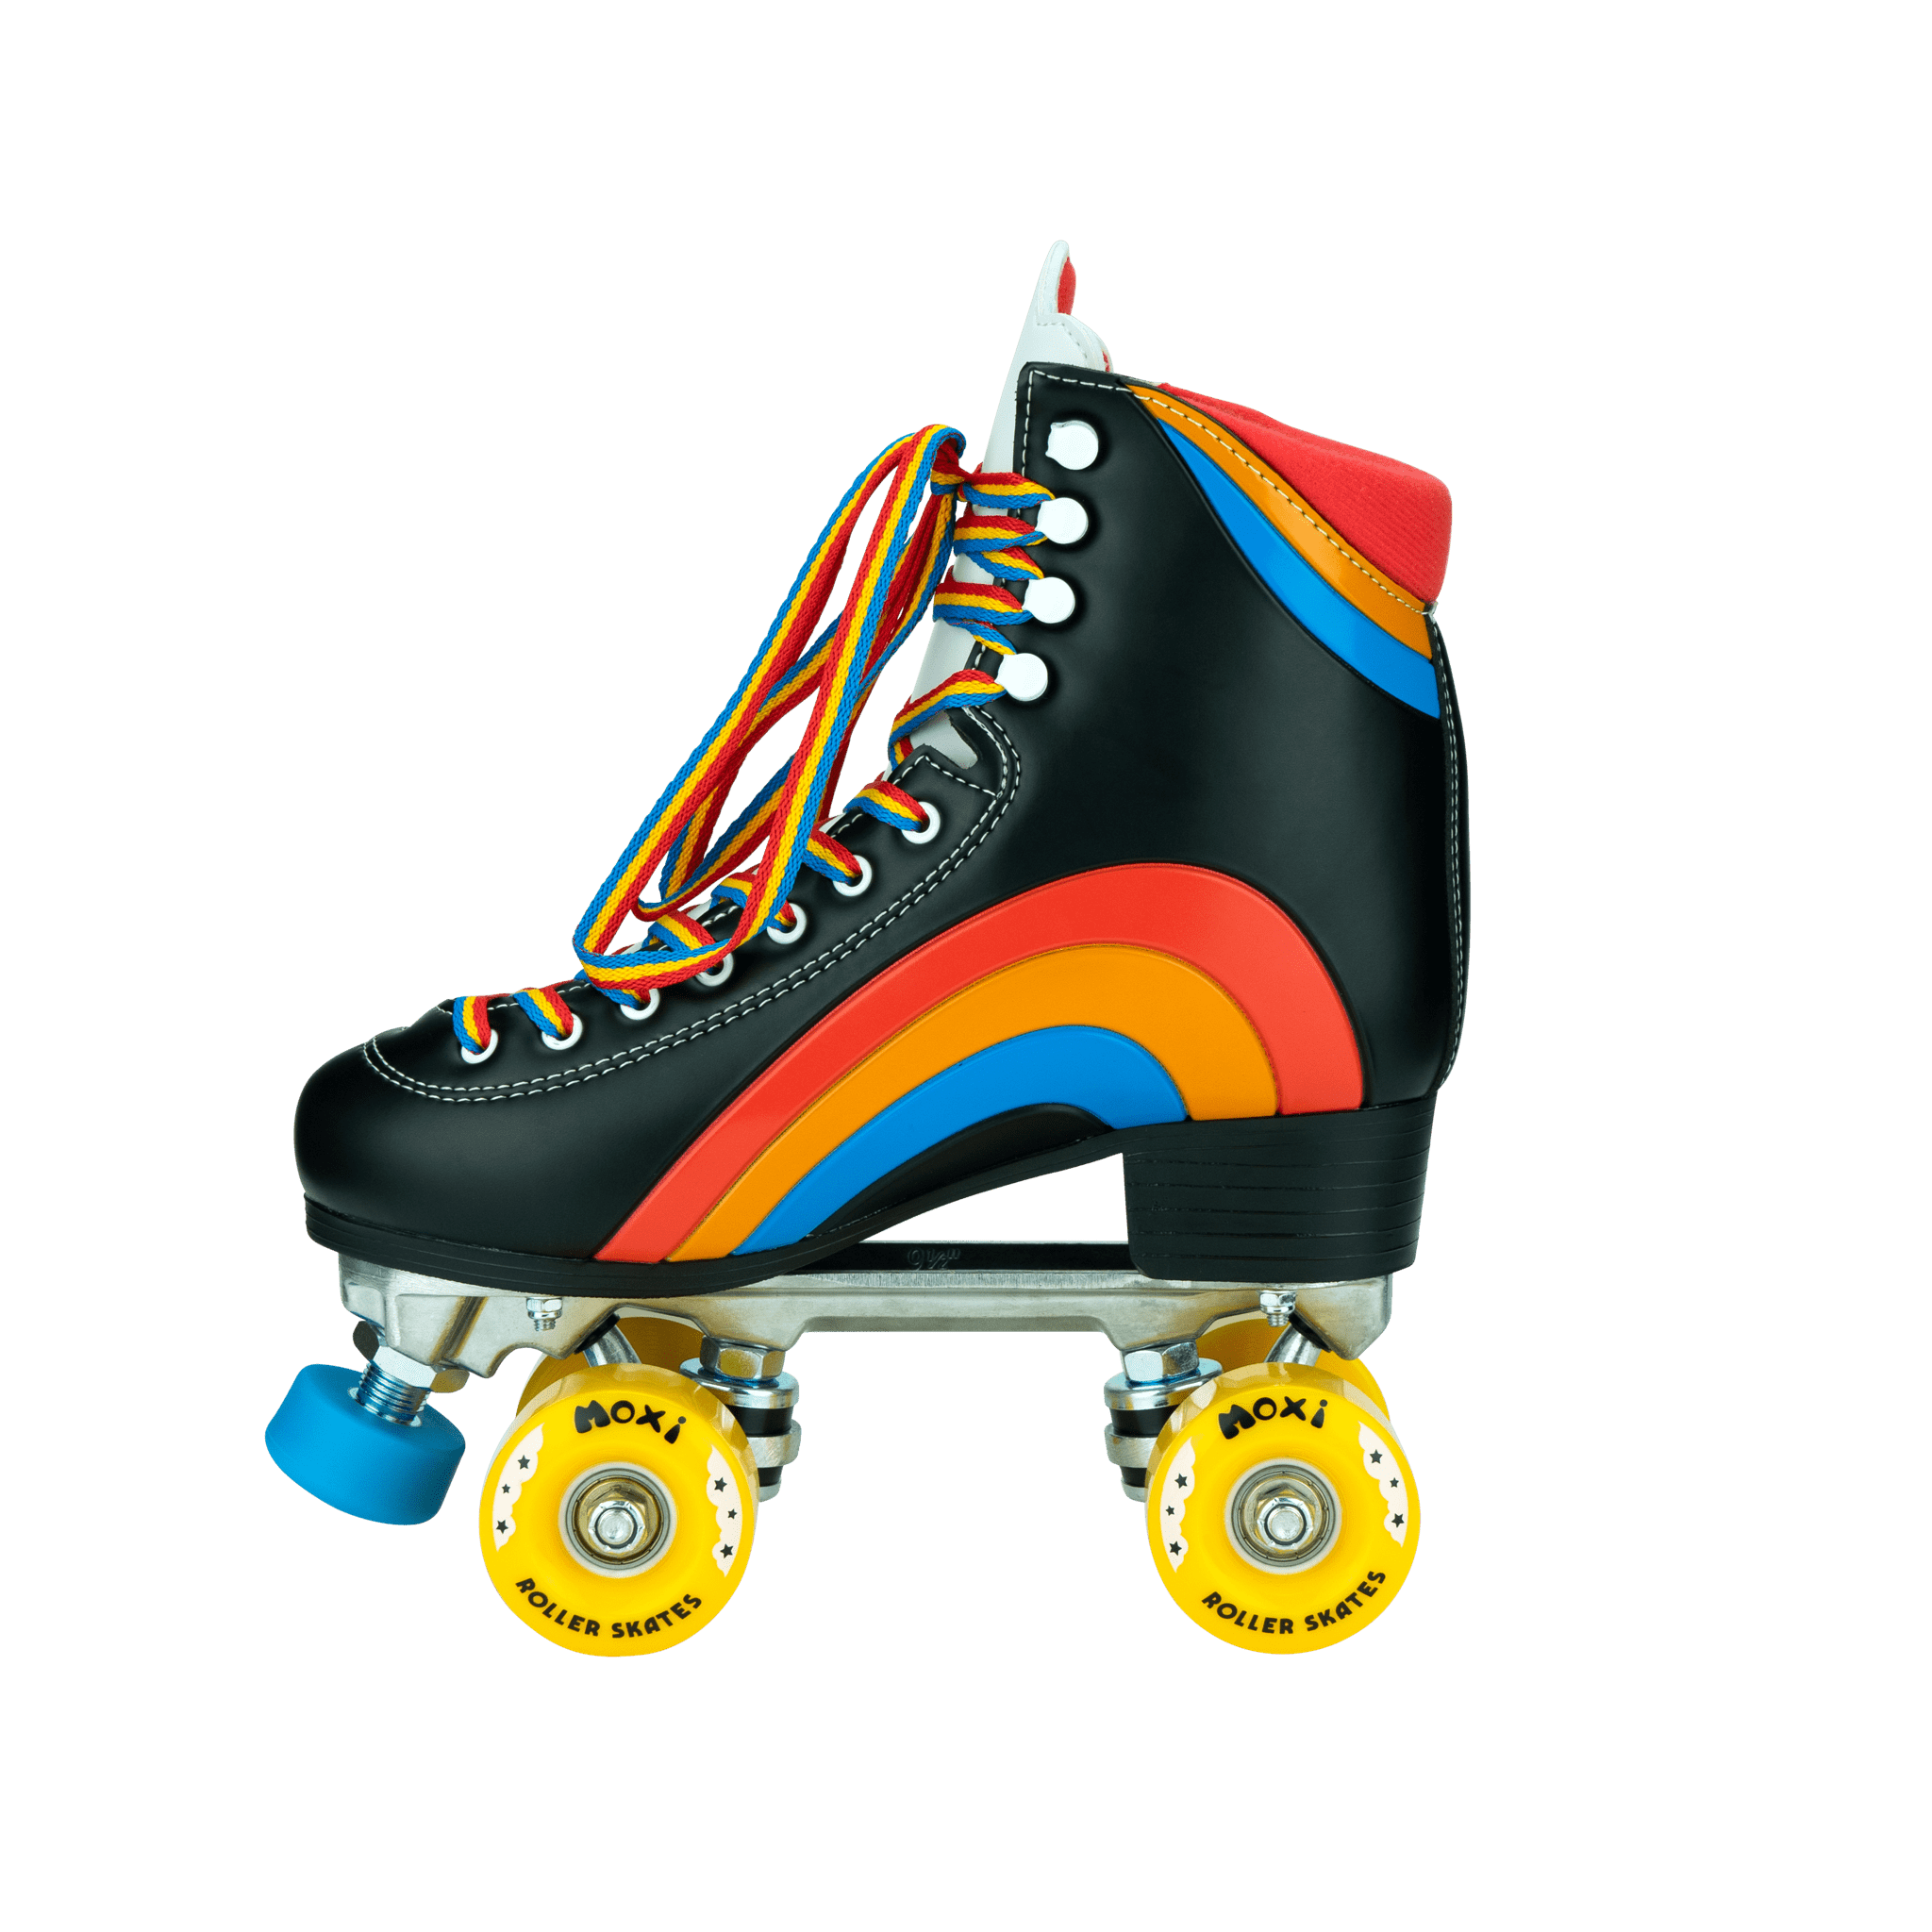 Rainbow Rider Rollerskates - Black